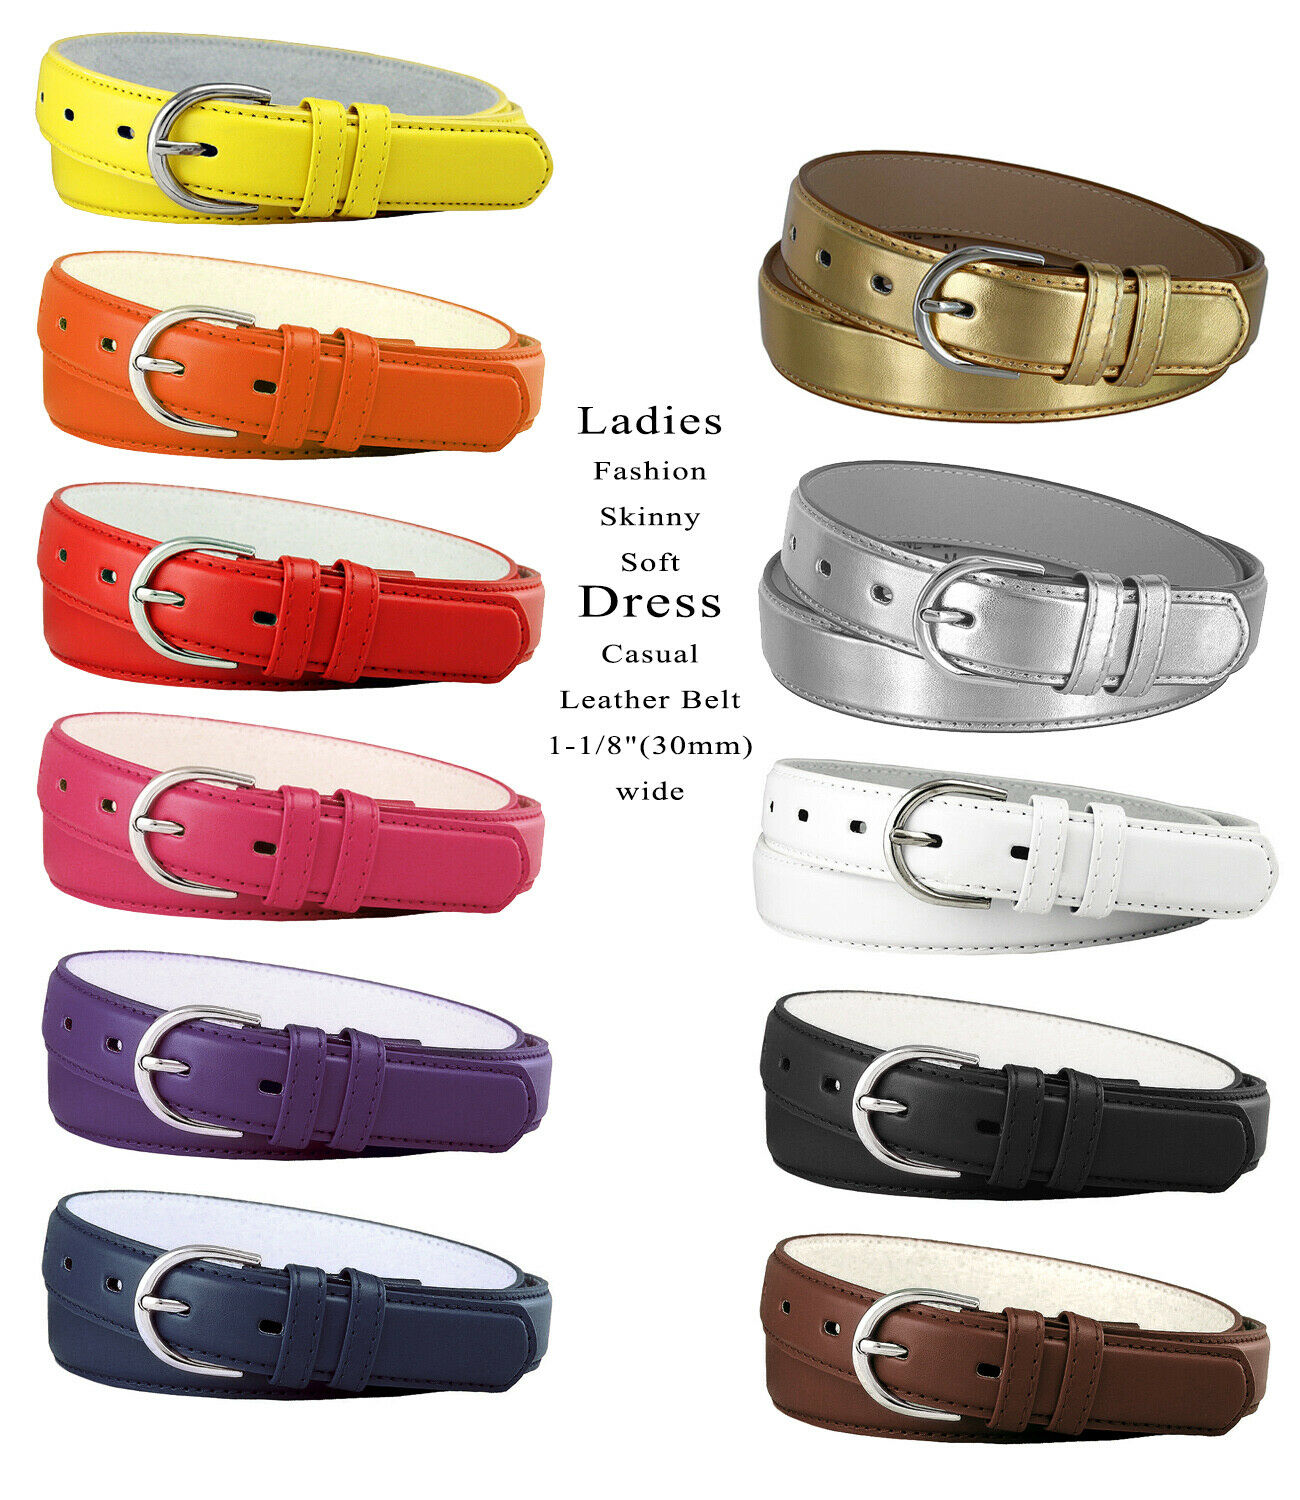 Women's Belts Ladies Fashion Skinny Soft Dress Casual Leather Belt 1-1/8"(30mm)